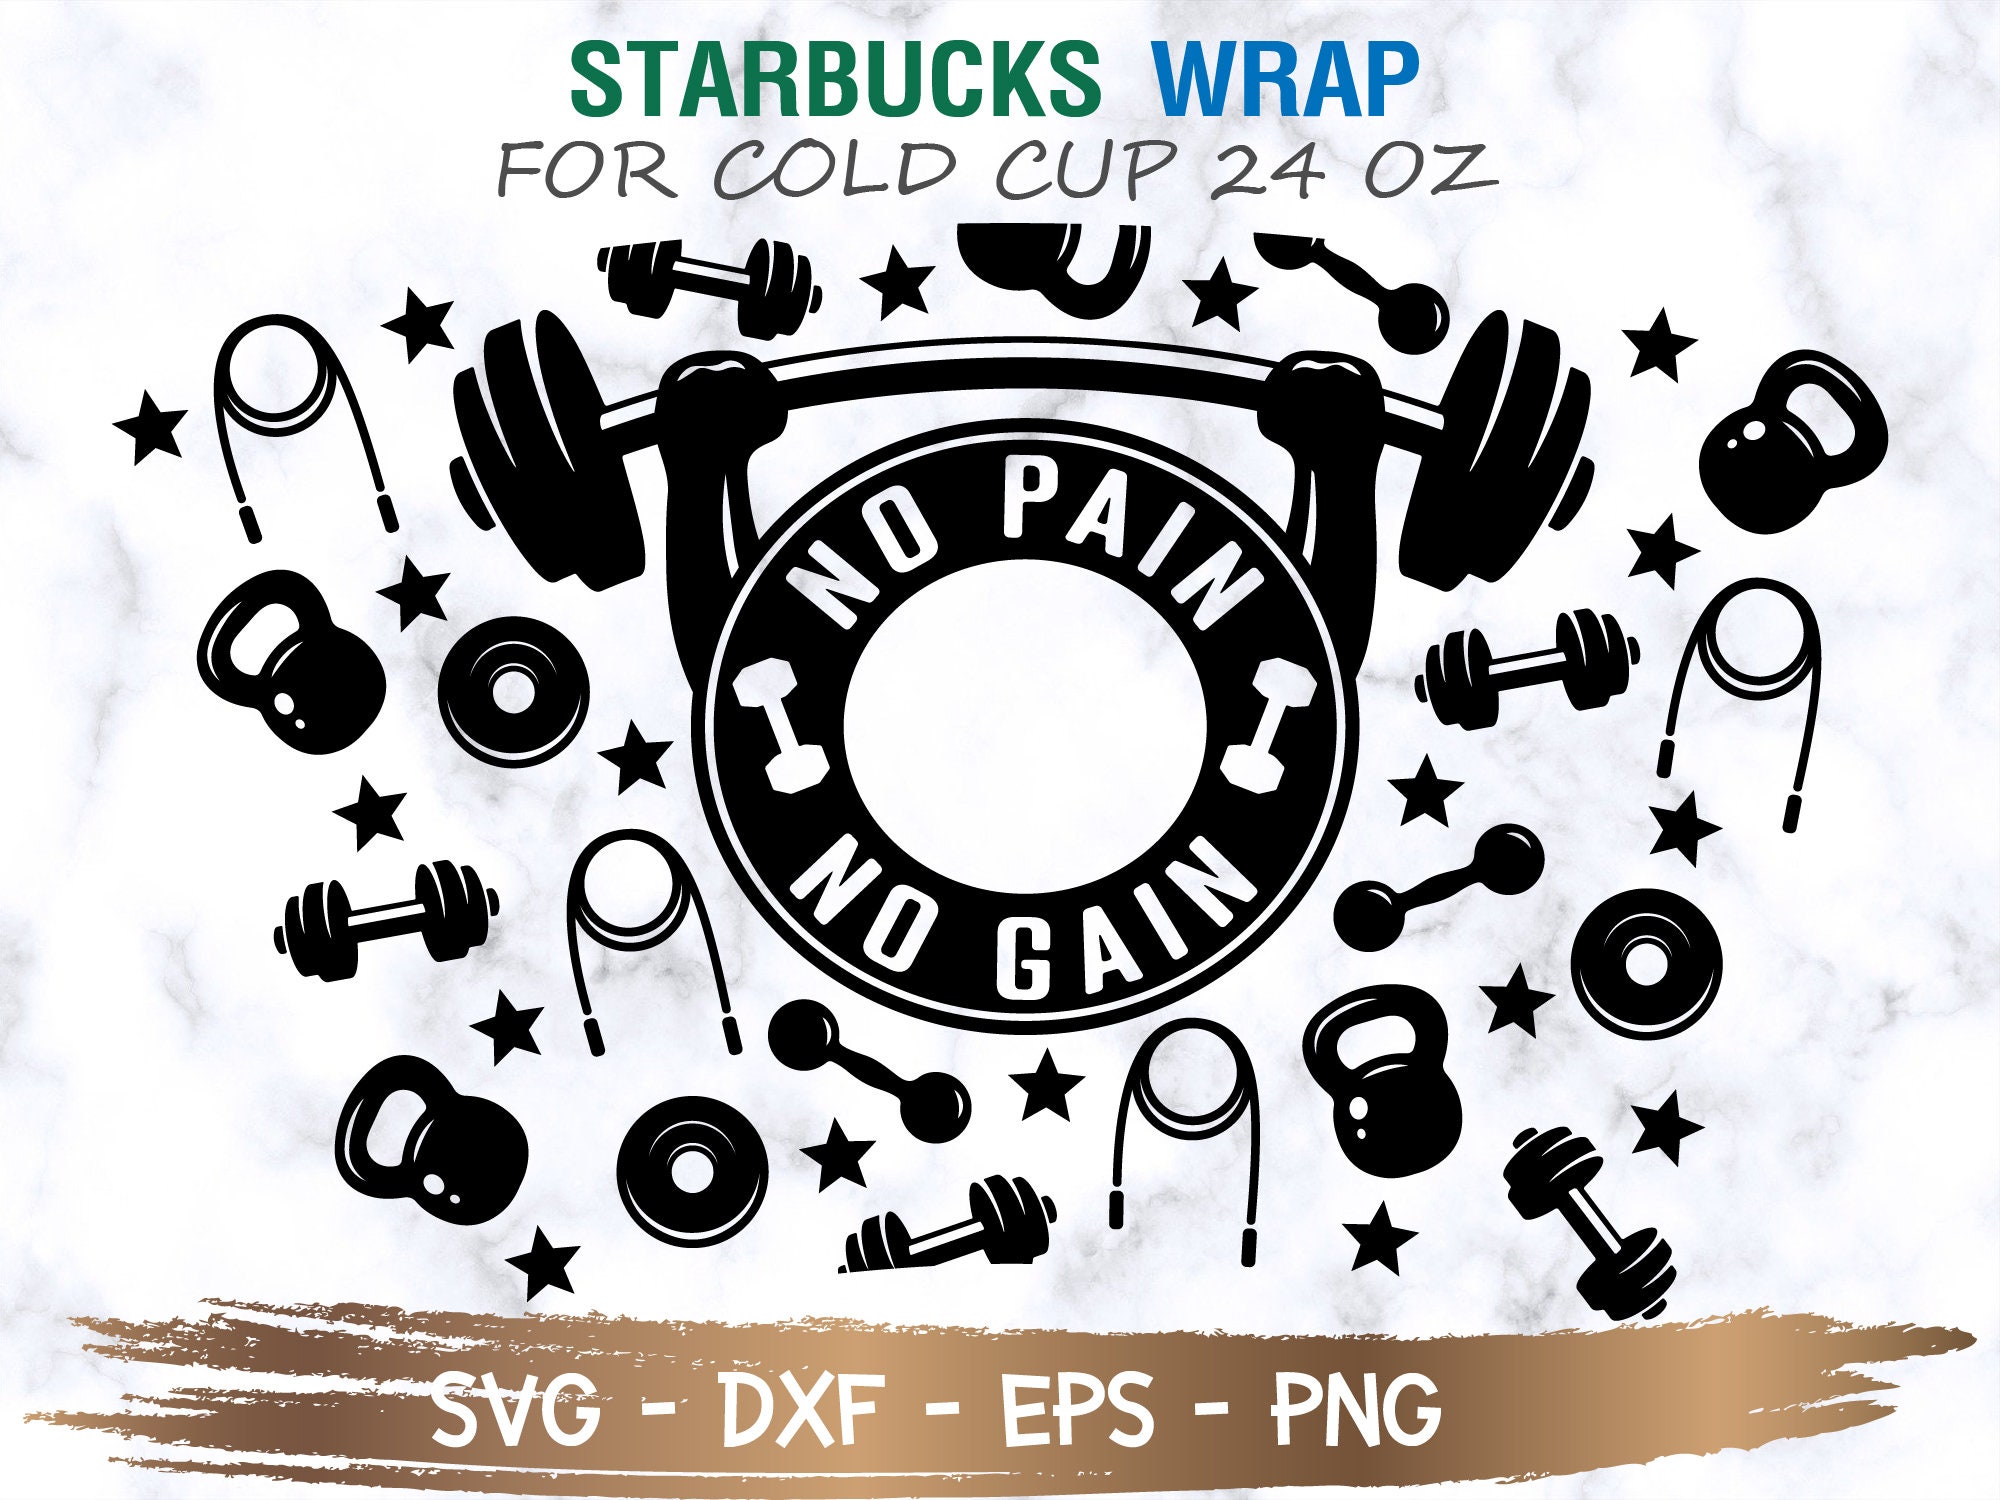 No Pain No Gain Starbucks Cold Cup Wrap 24oz